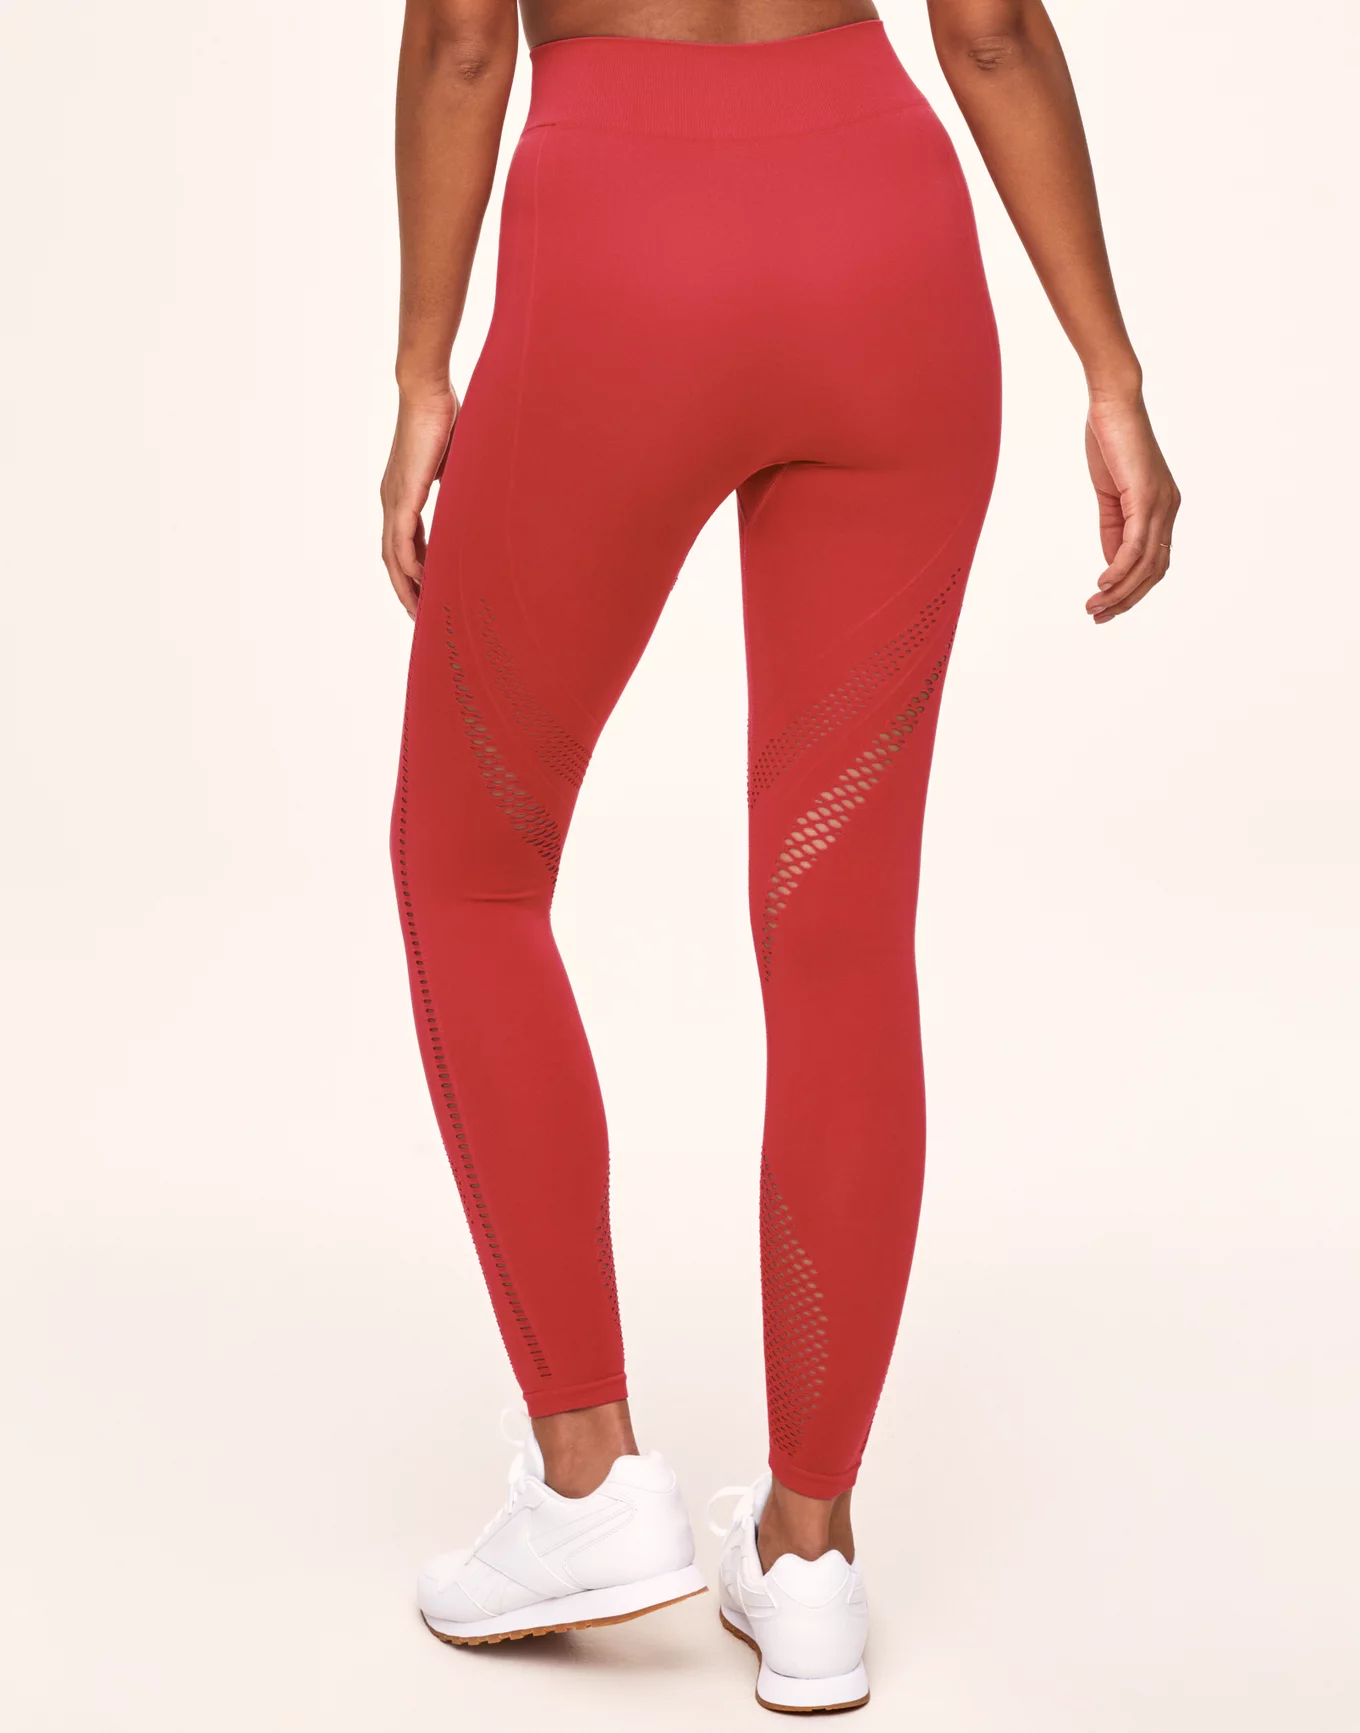 Victoria Secret Sport Seamless 7/8 Tight Pant Leggings Yoga Black Pink XL S  NEW